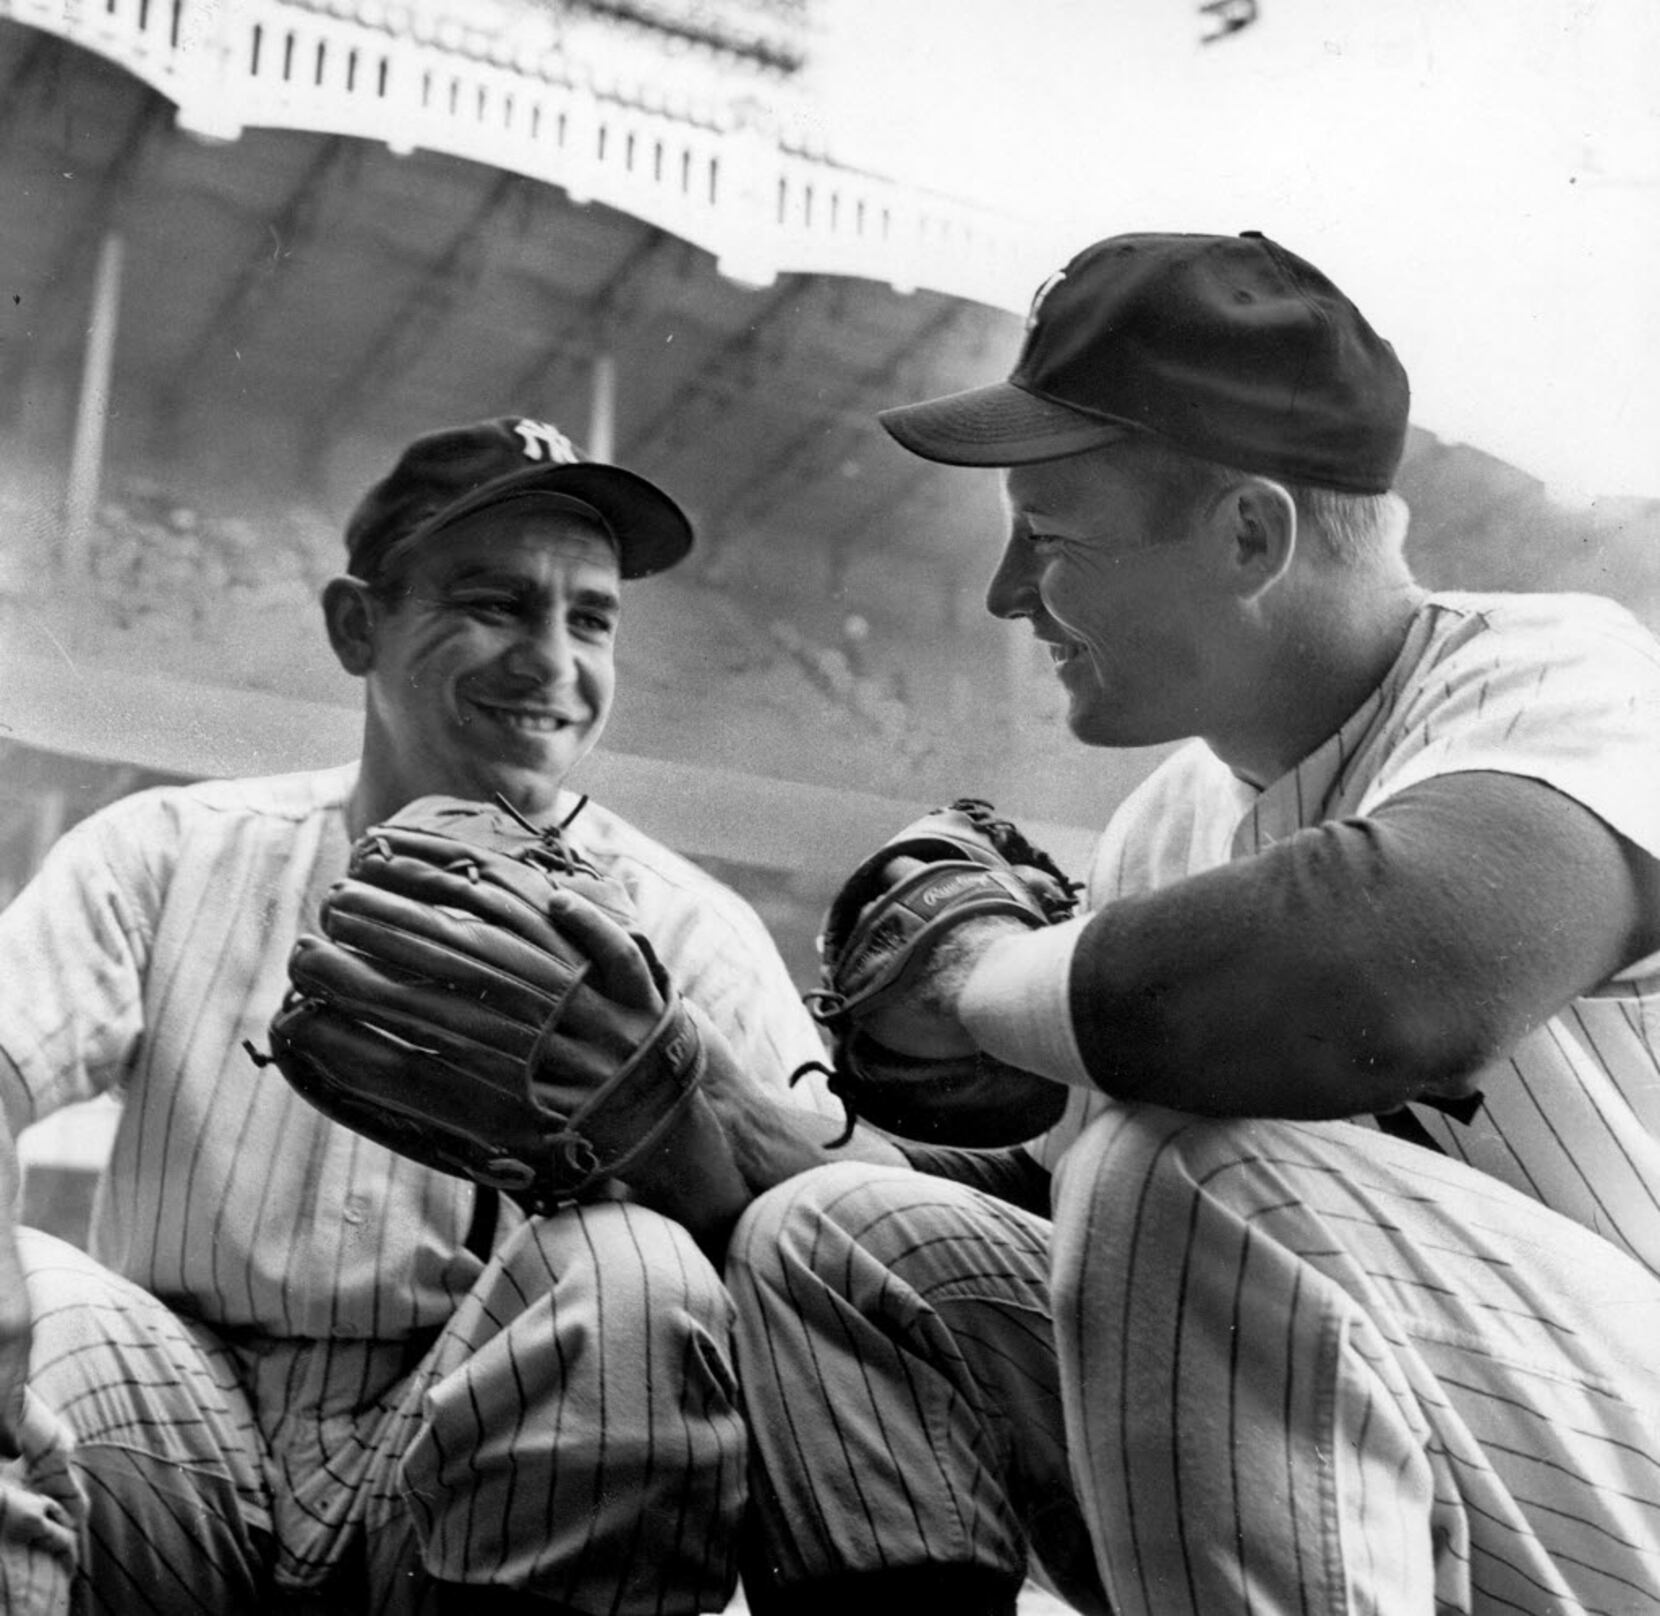 Yogi Berra dead at 90: Yankees legend, Baseball Hall of Famer was lovable  character, American hero – New York Daily News